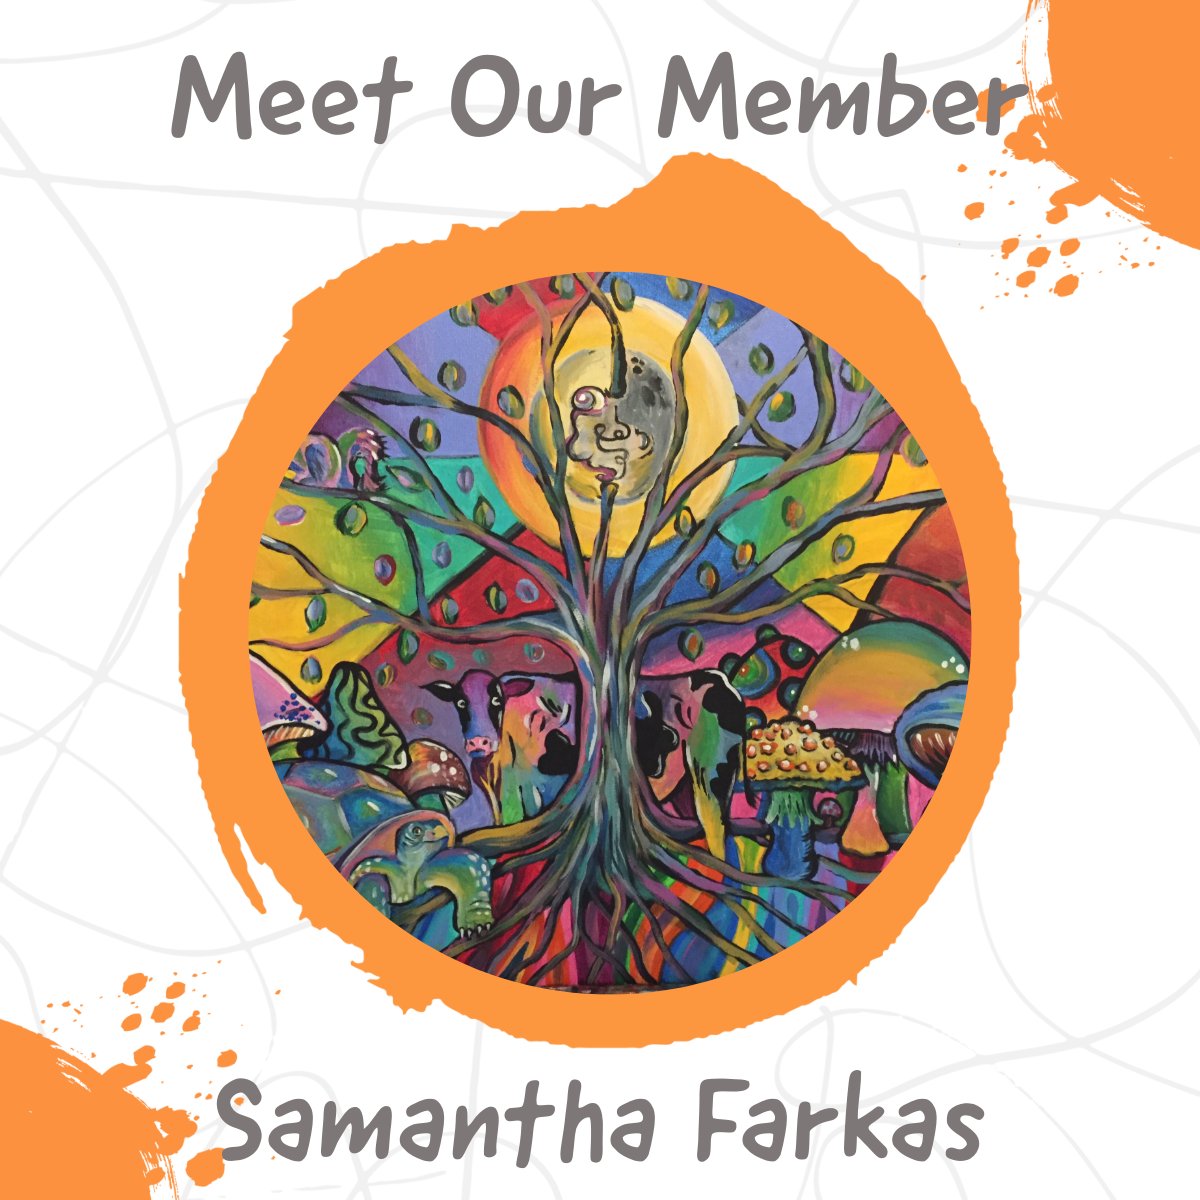 Meet our member, Samantha Farkas! Take a moment to explore their work here - 
instagram.com/samfarout
facebook.com/SamFarkasArt

#Contemporary #HomeDecor #InteriorDesign #WallArt #LocalArt #Ohio #InvestInArt #FineArt